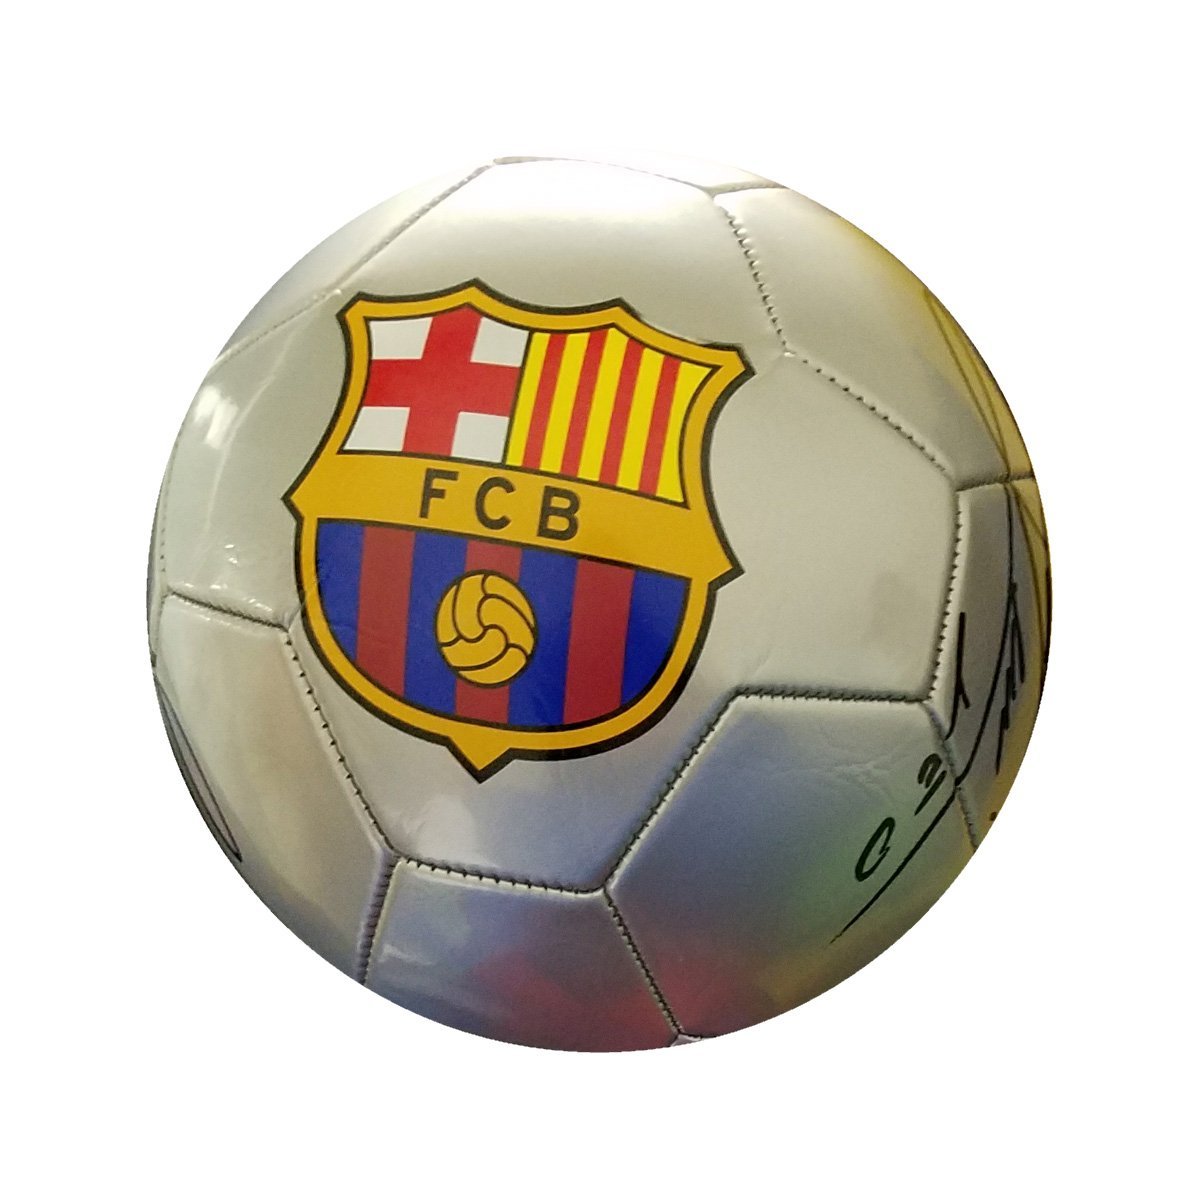 Balon Soccer Liga uno Fcb Barcelona